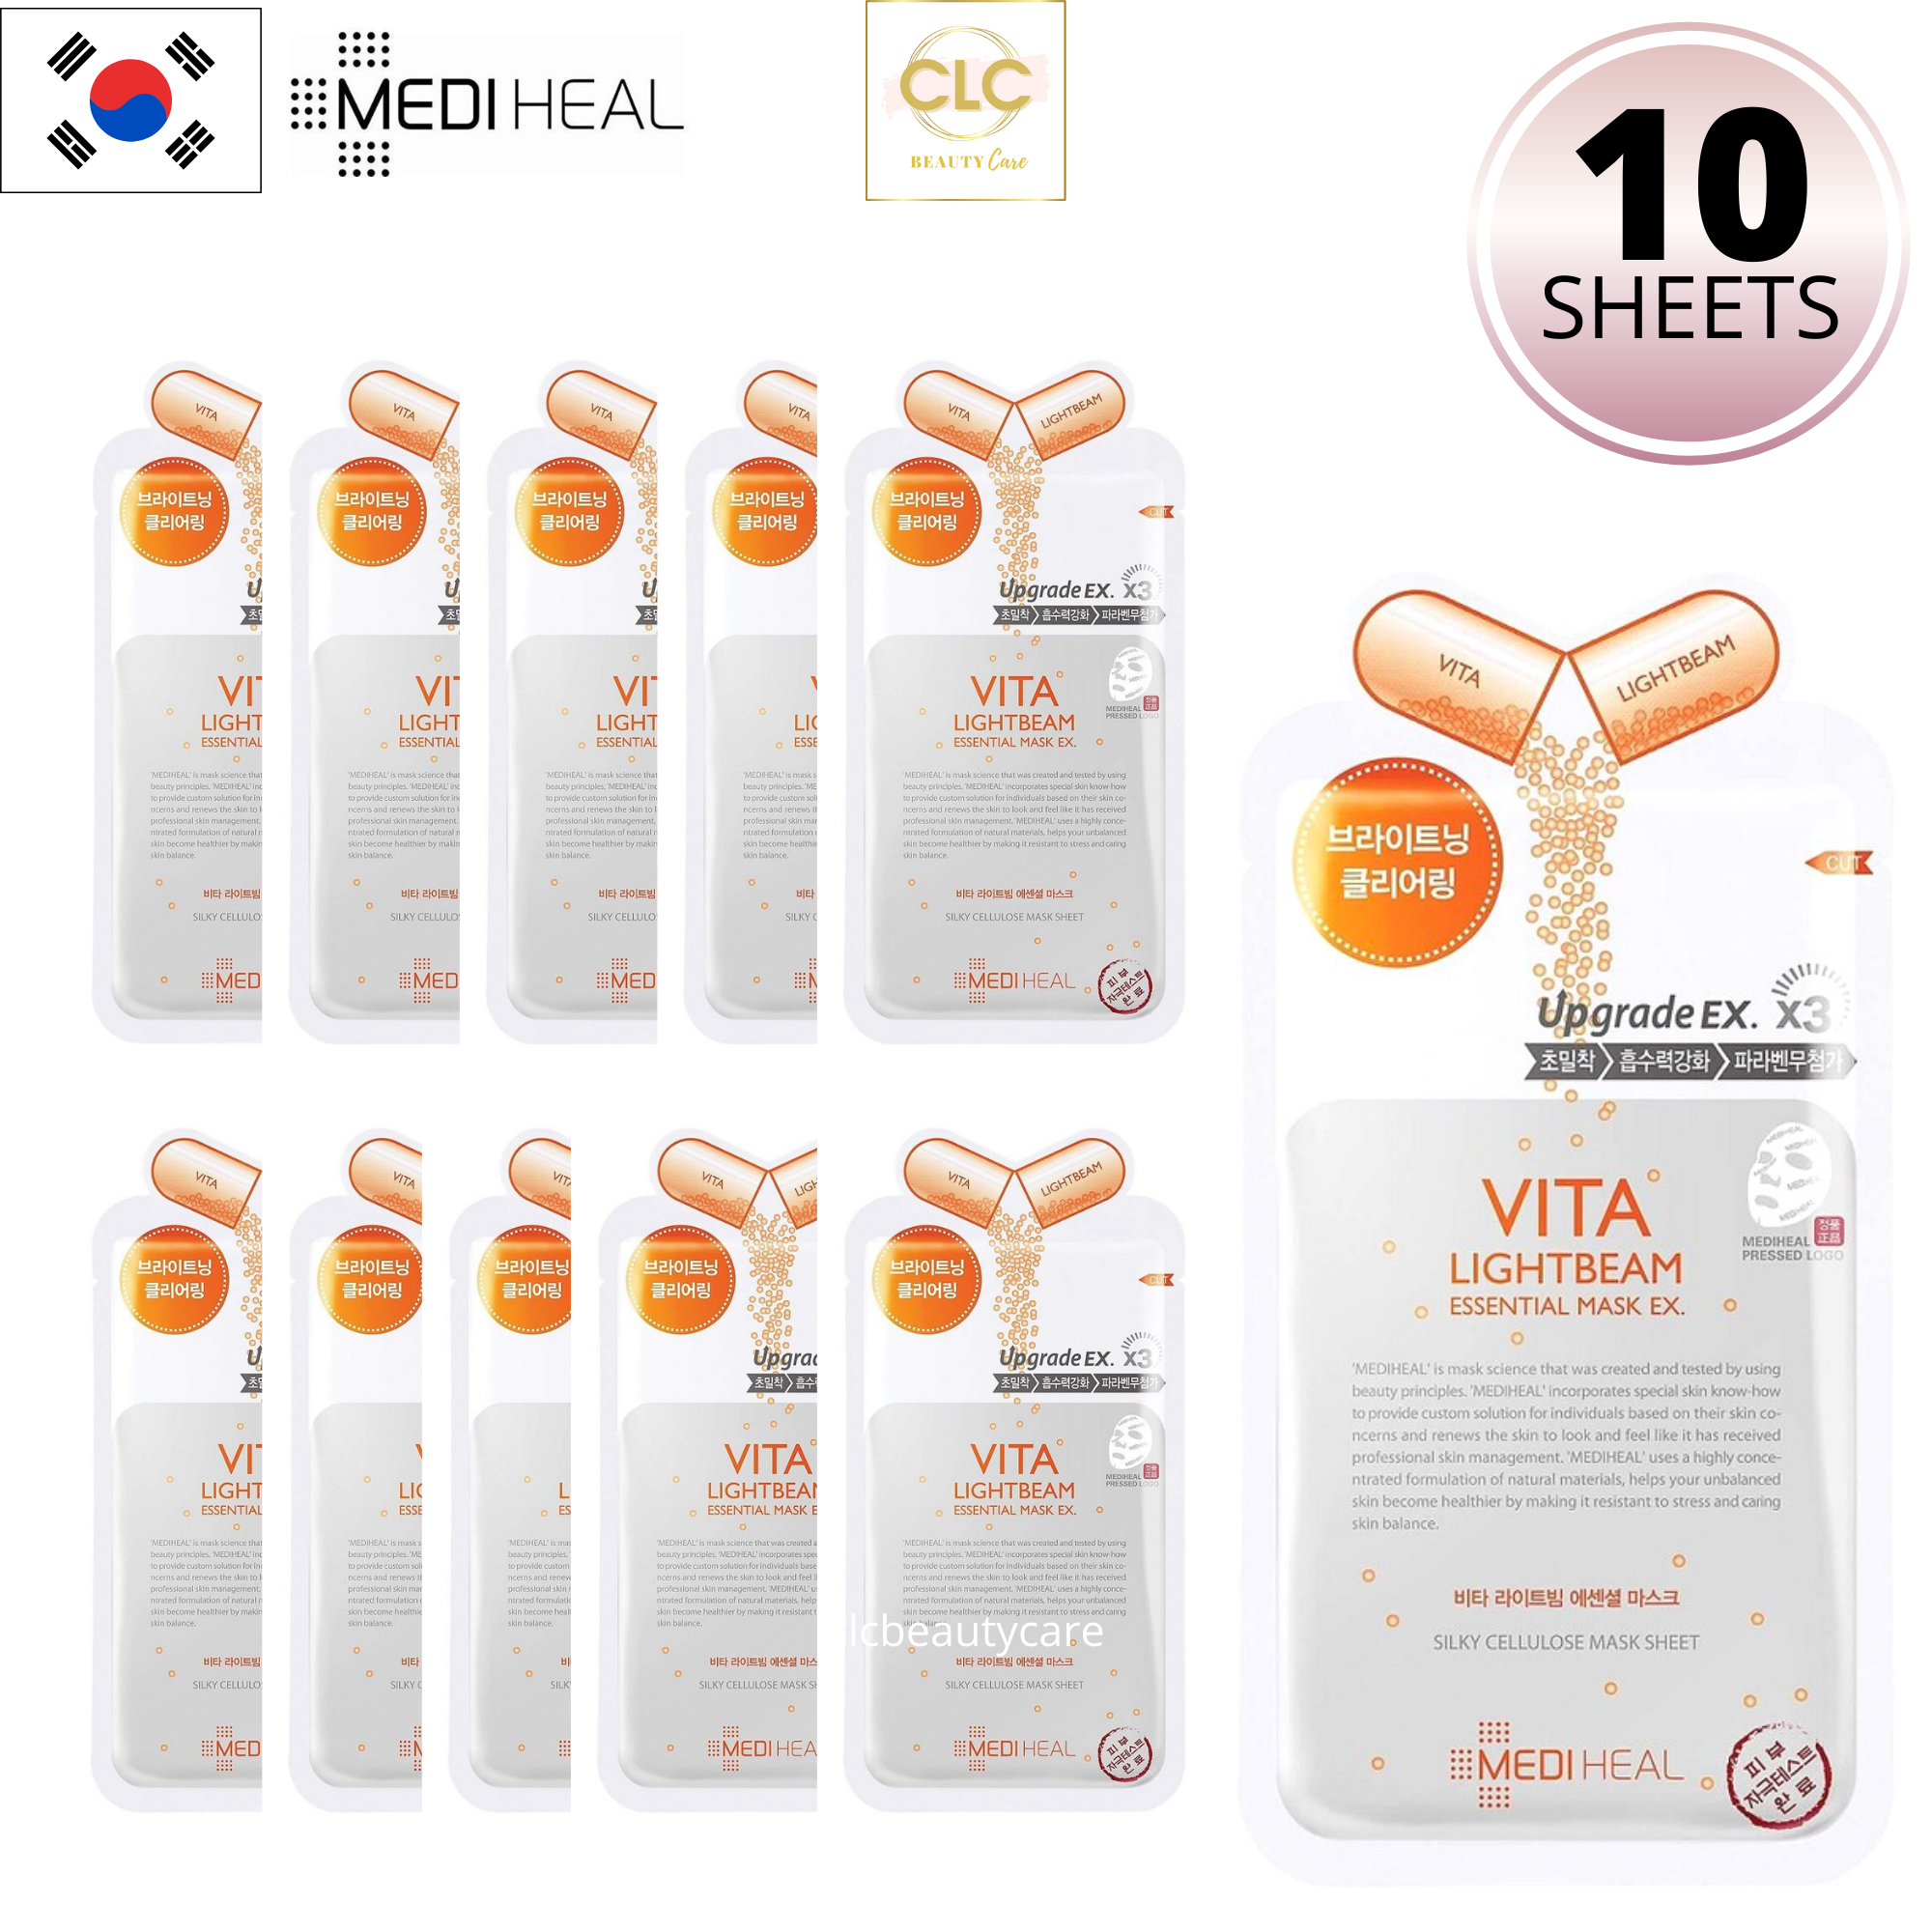 Mặt Nạ Dưỡng Trắng Sáng Da Mediheal Vita Lightbeam Essential Mask EX 25ml - 1 Hộp 10 Masks